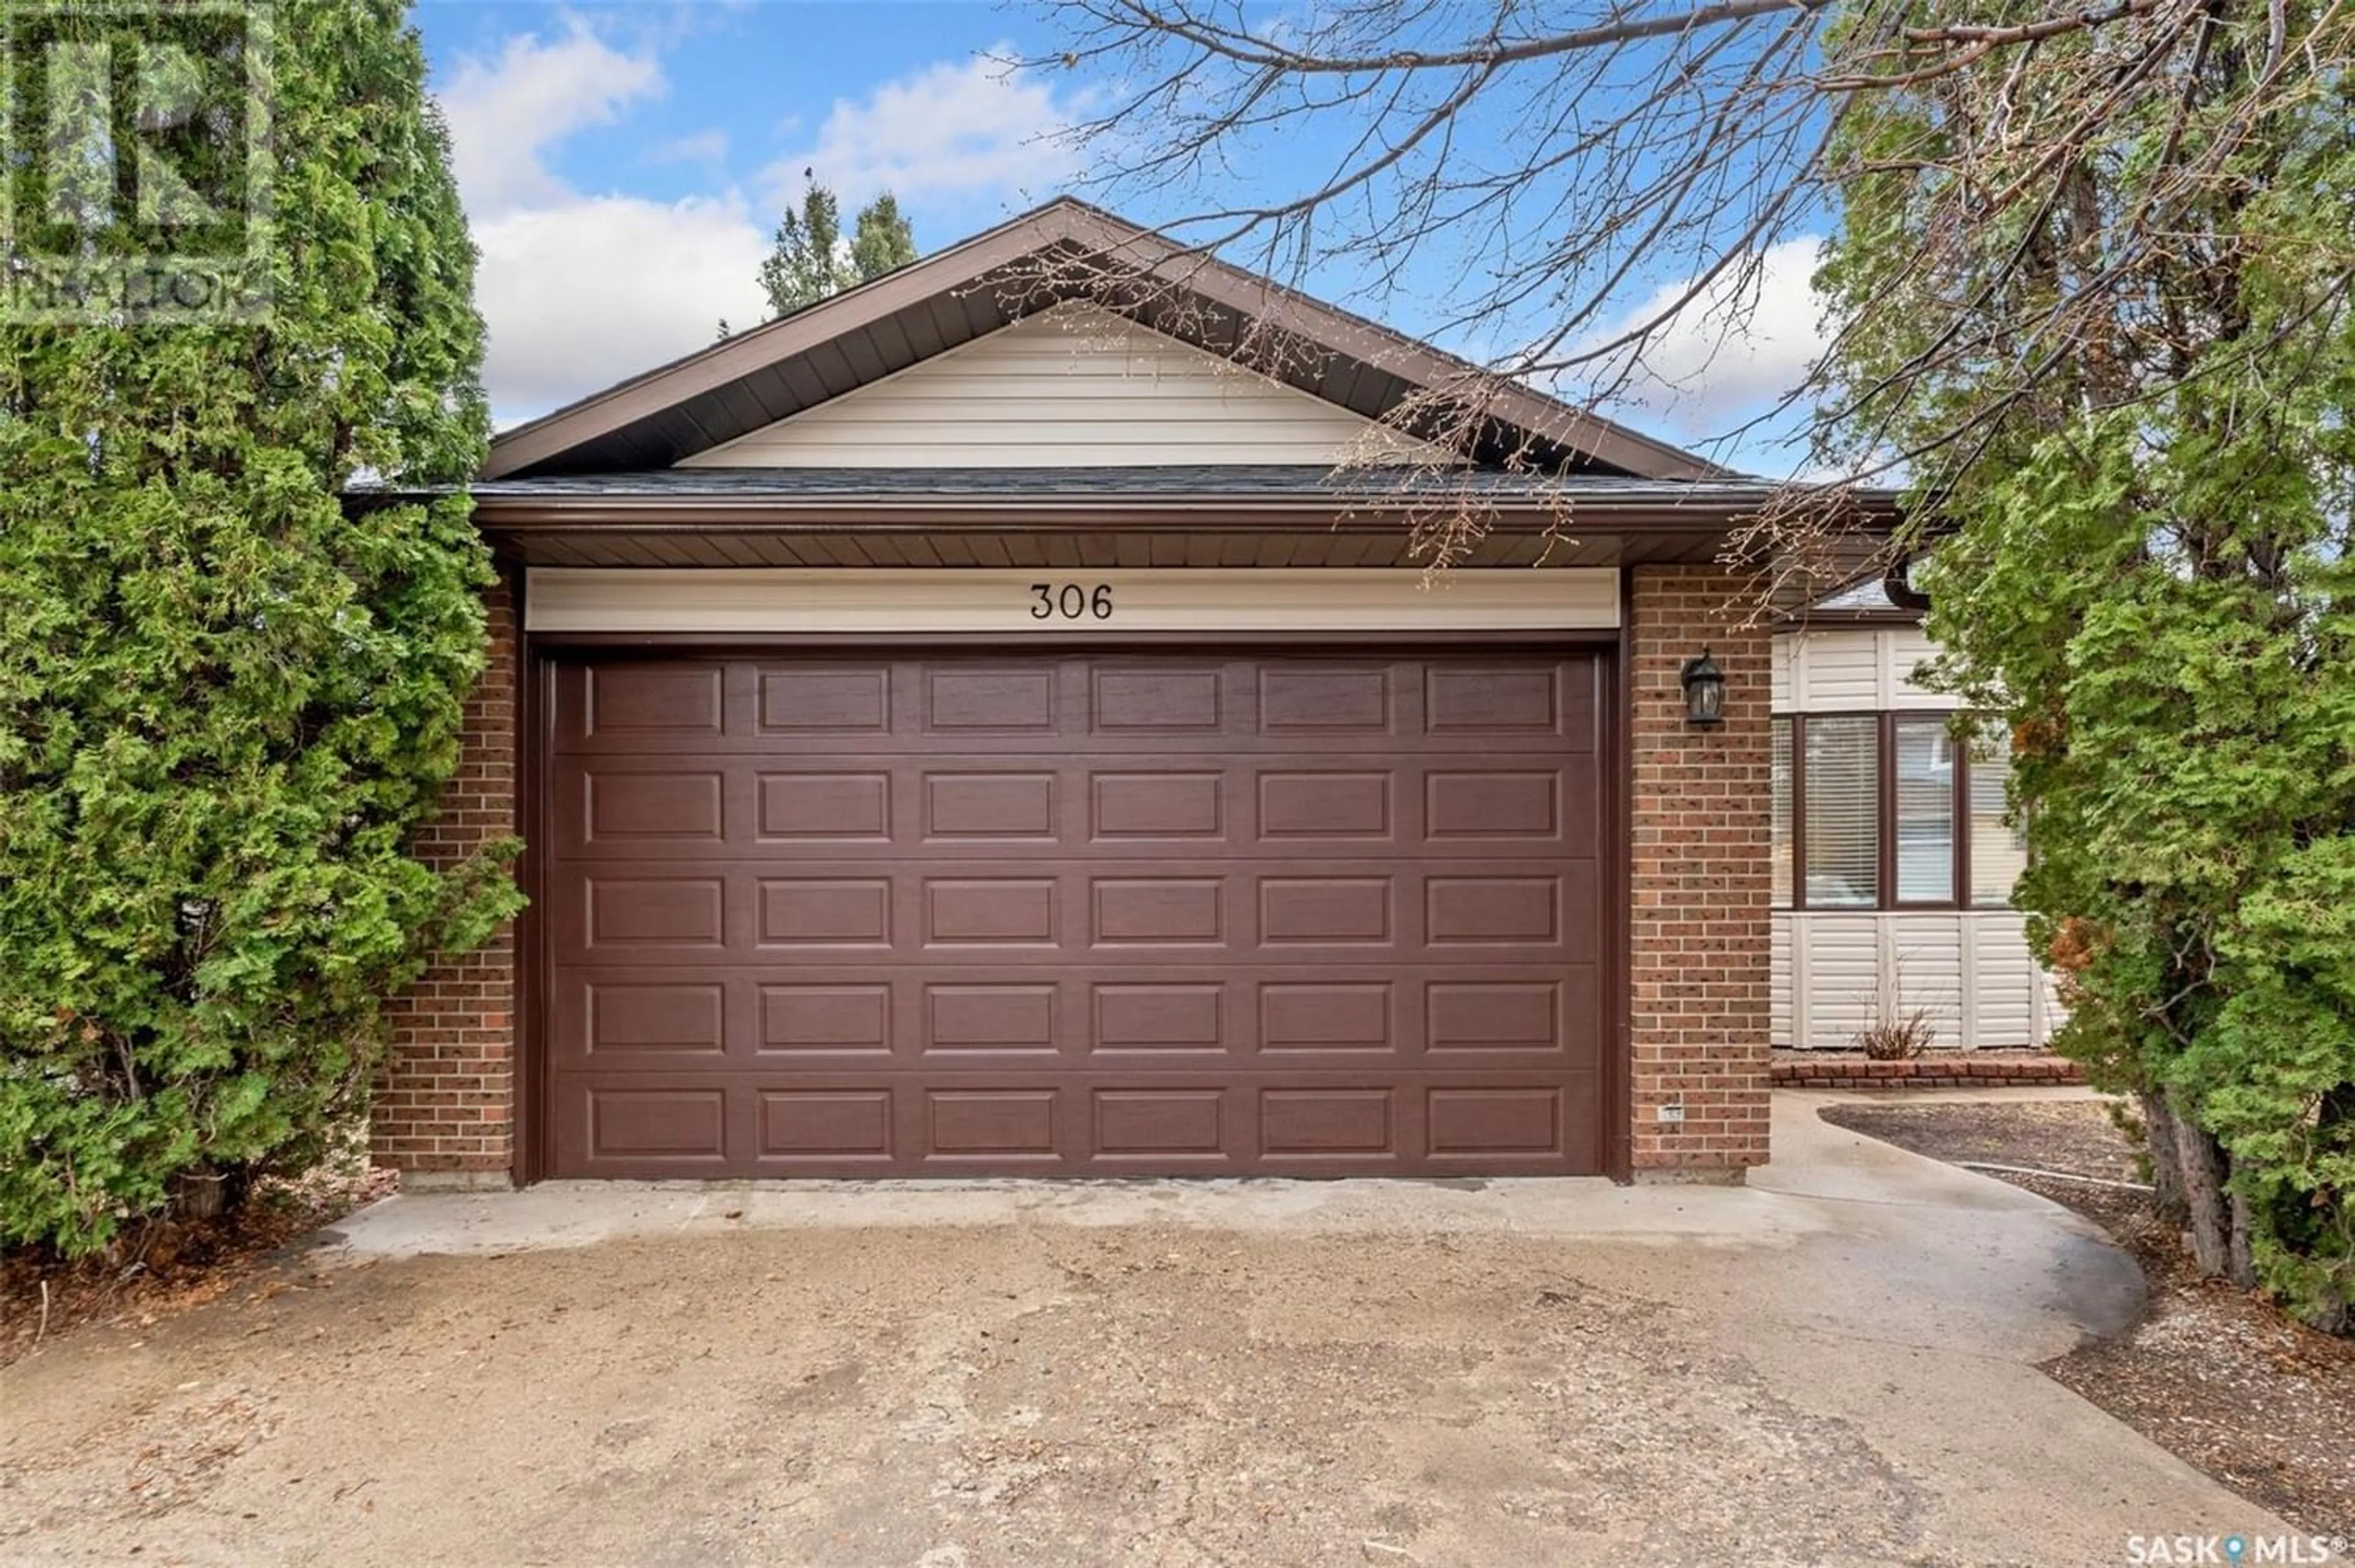 Home with brick exterior material for 306 AE Adams LANE, Saskatoon Saskatchewan S7H5N4